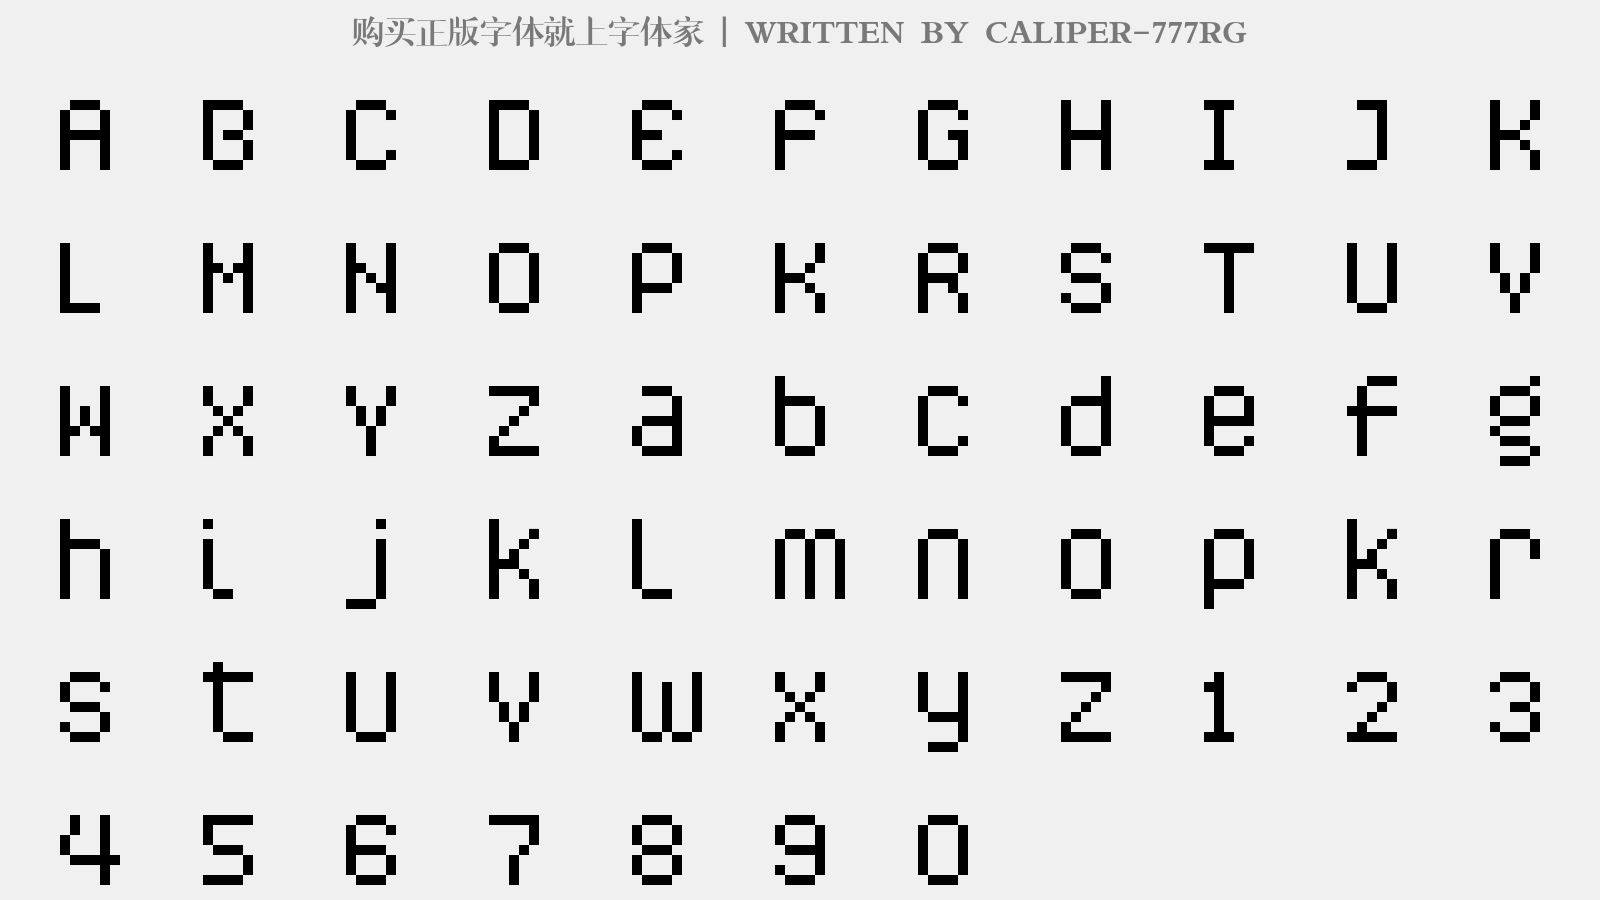 CALIPER-777RG - 大写字母/小写字母/数字